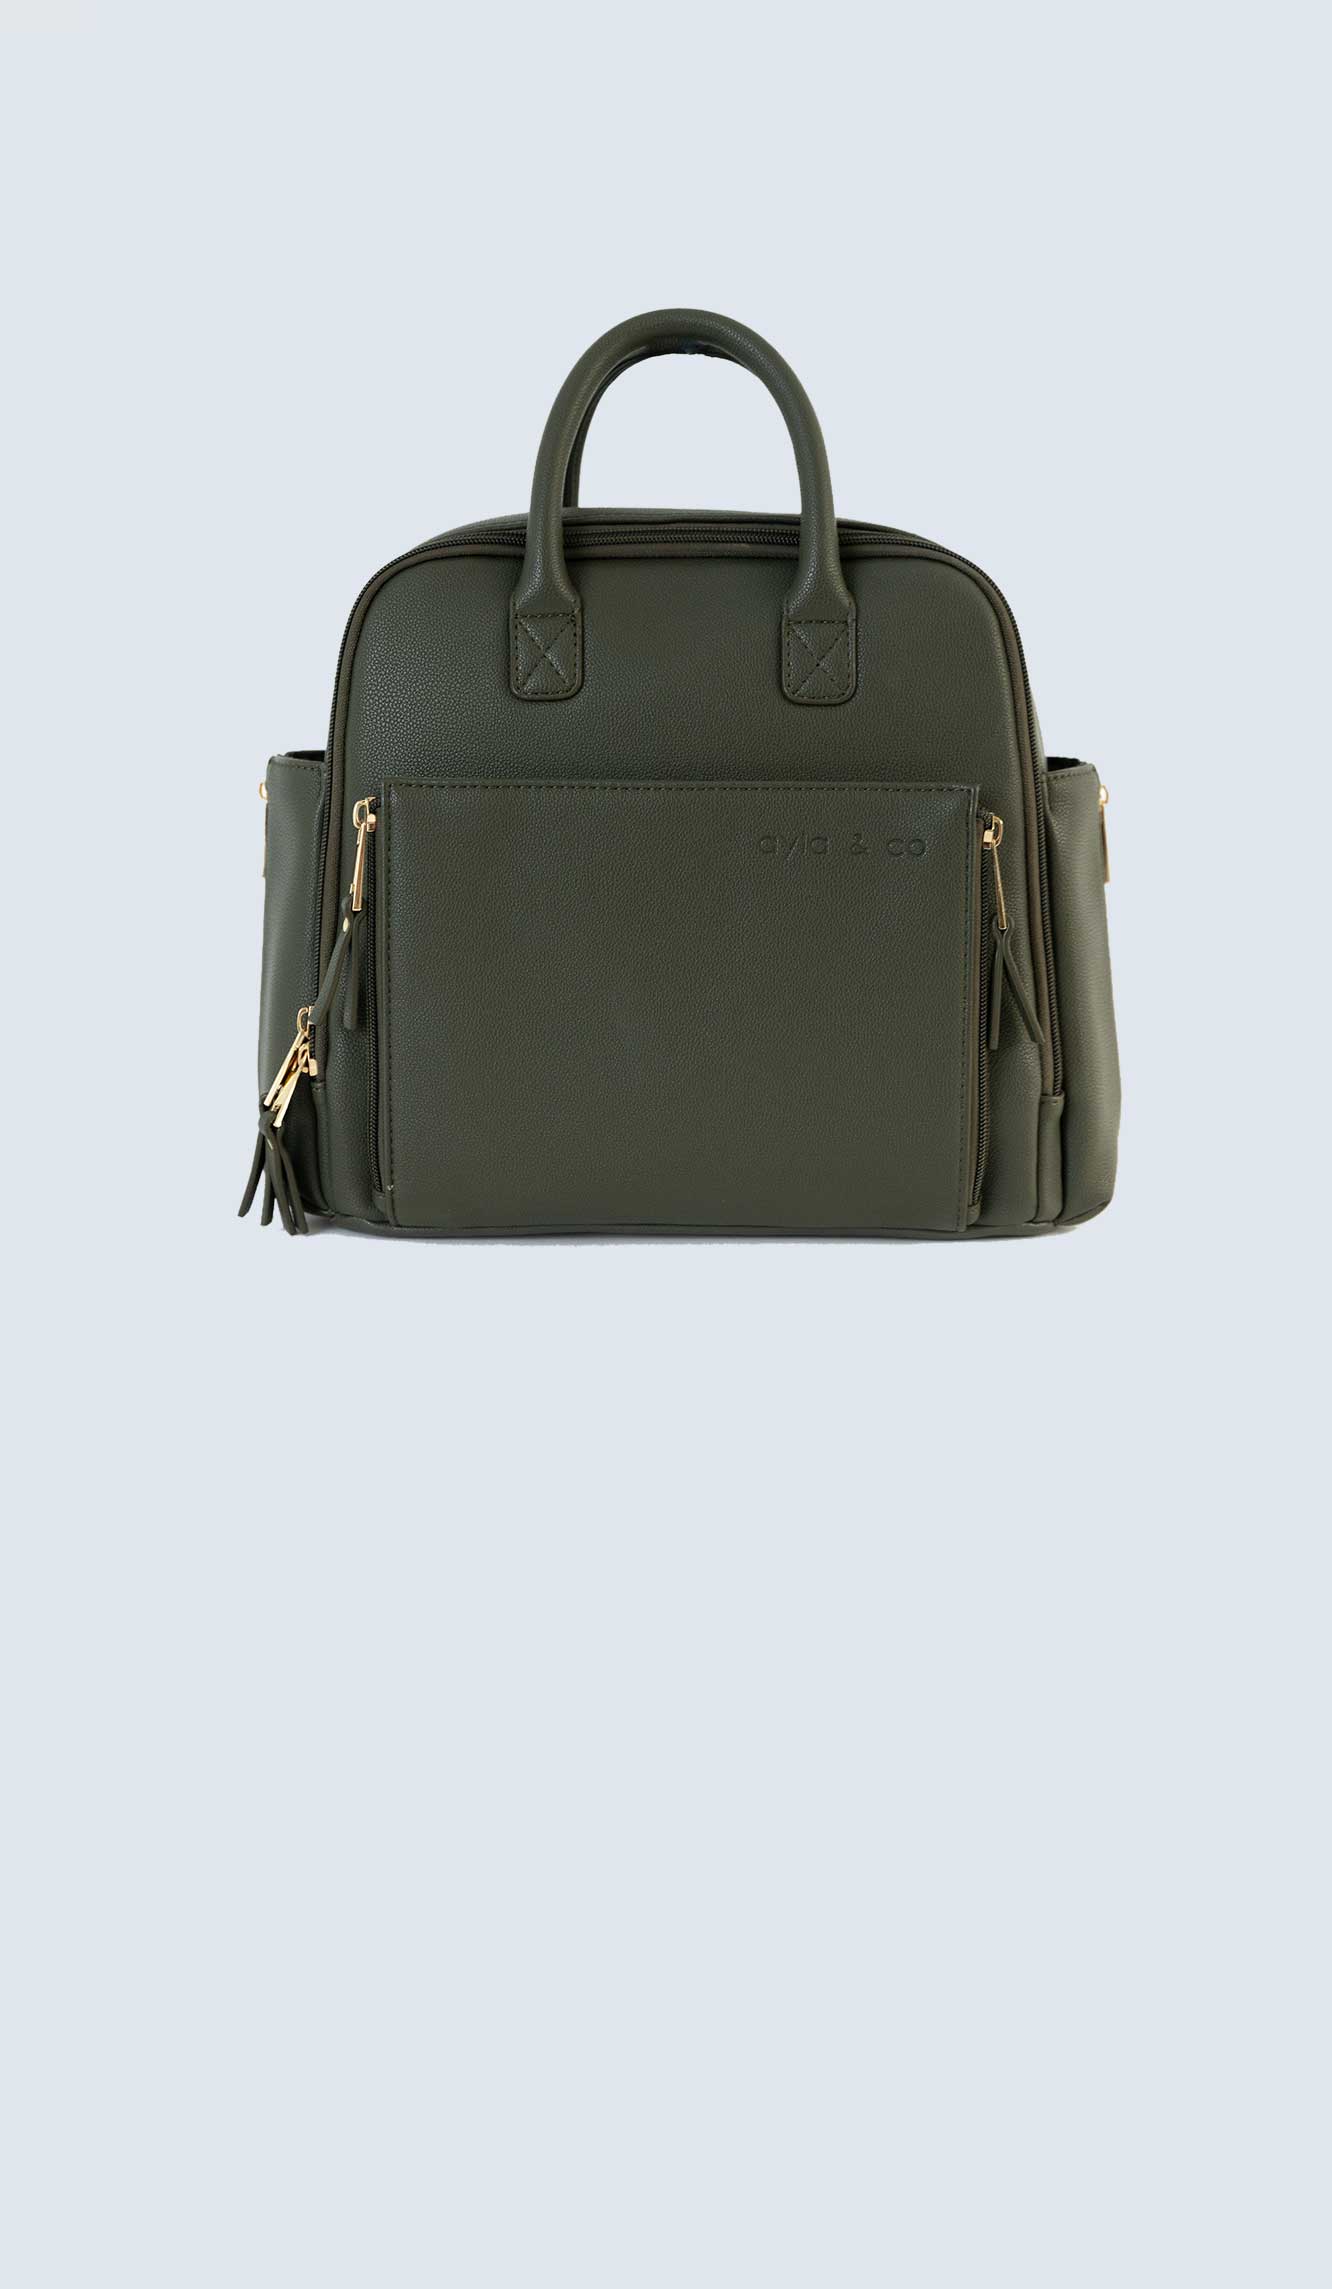 Diaper bag Bag-in-Bag: suitable for your design handbag - Lilibell®